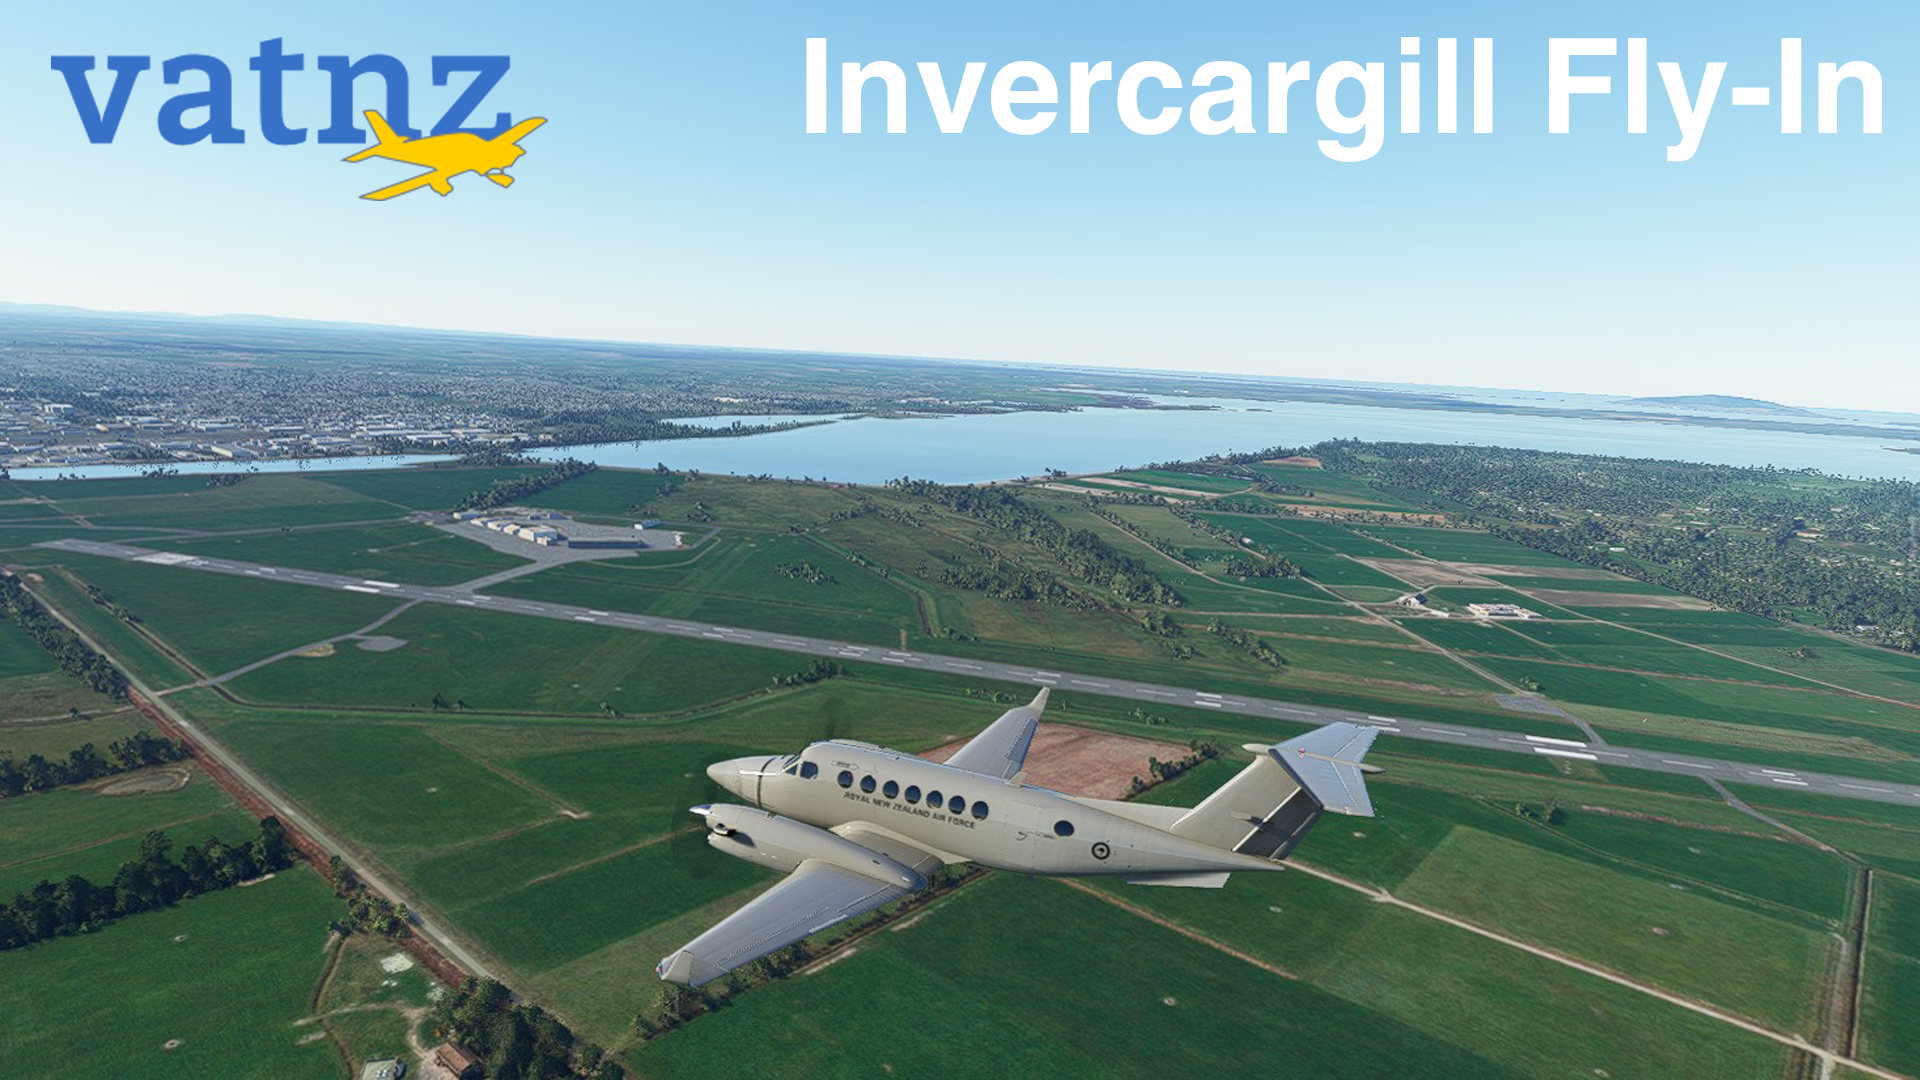 Invercargill Fly-in